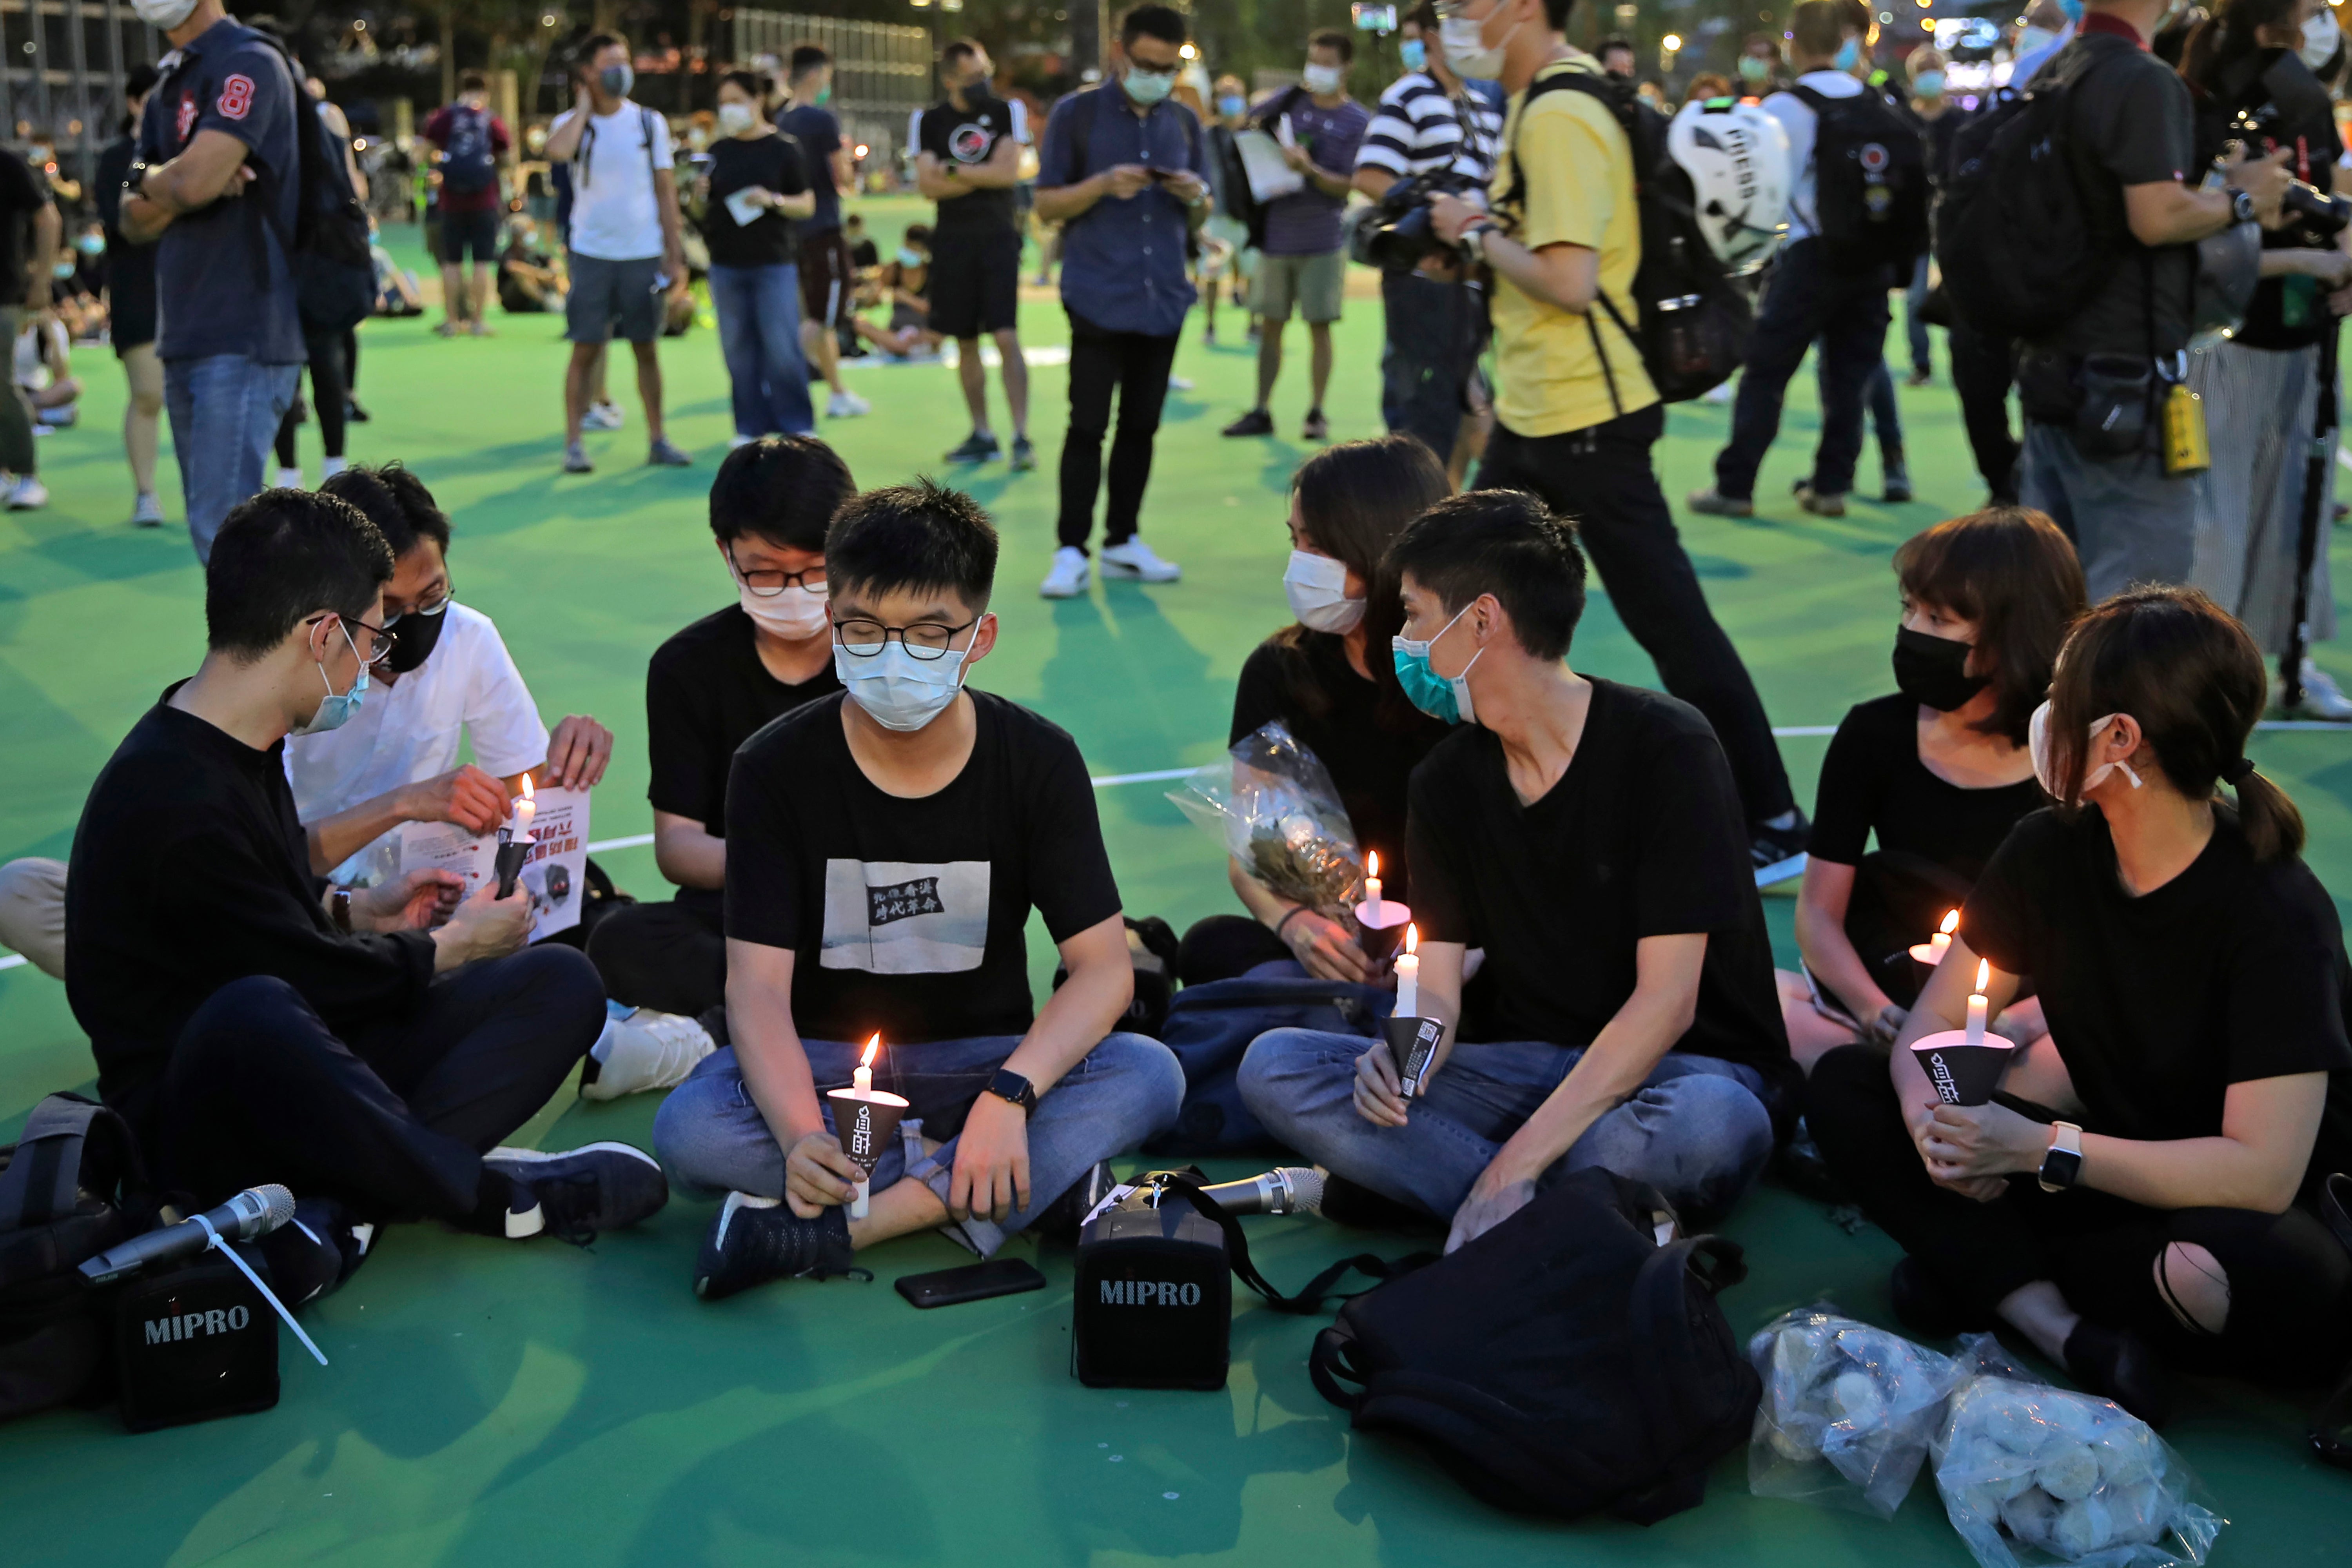 Hong Kong democracy activist Joshua Wong, second left, at the 4 June 2020 vigil for the victims of the 1989 Tiananmen Square Massacre